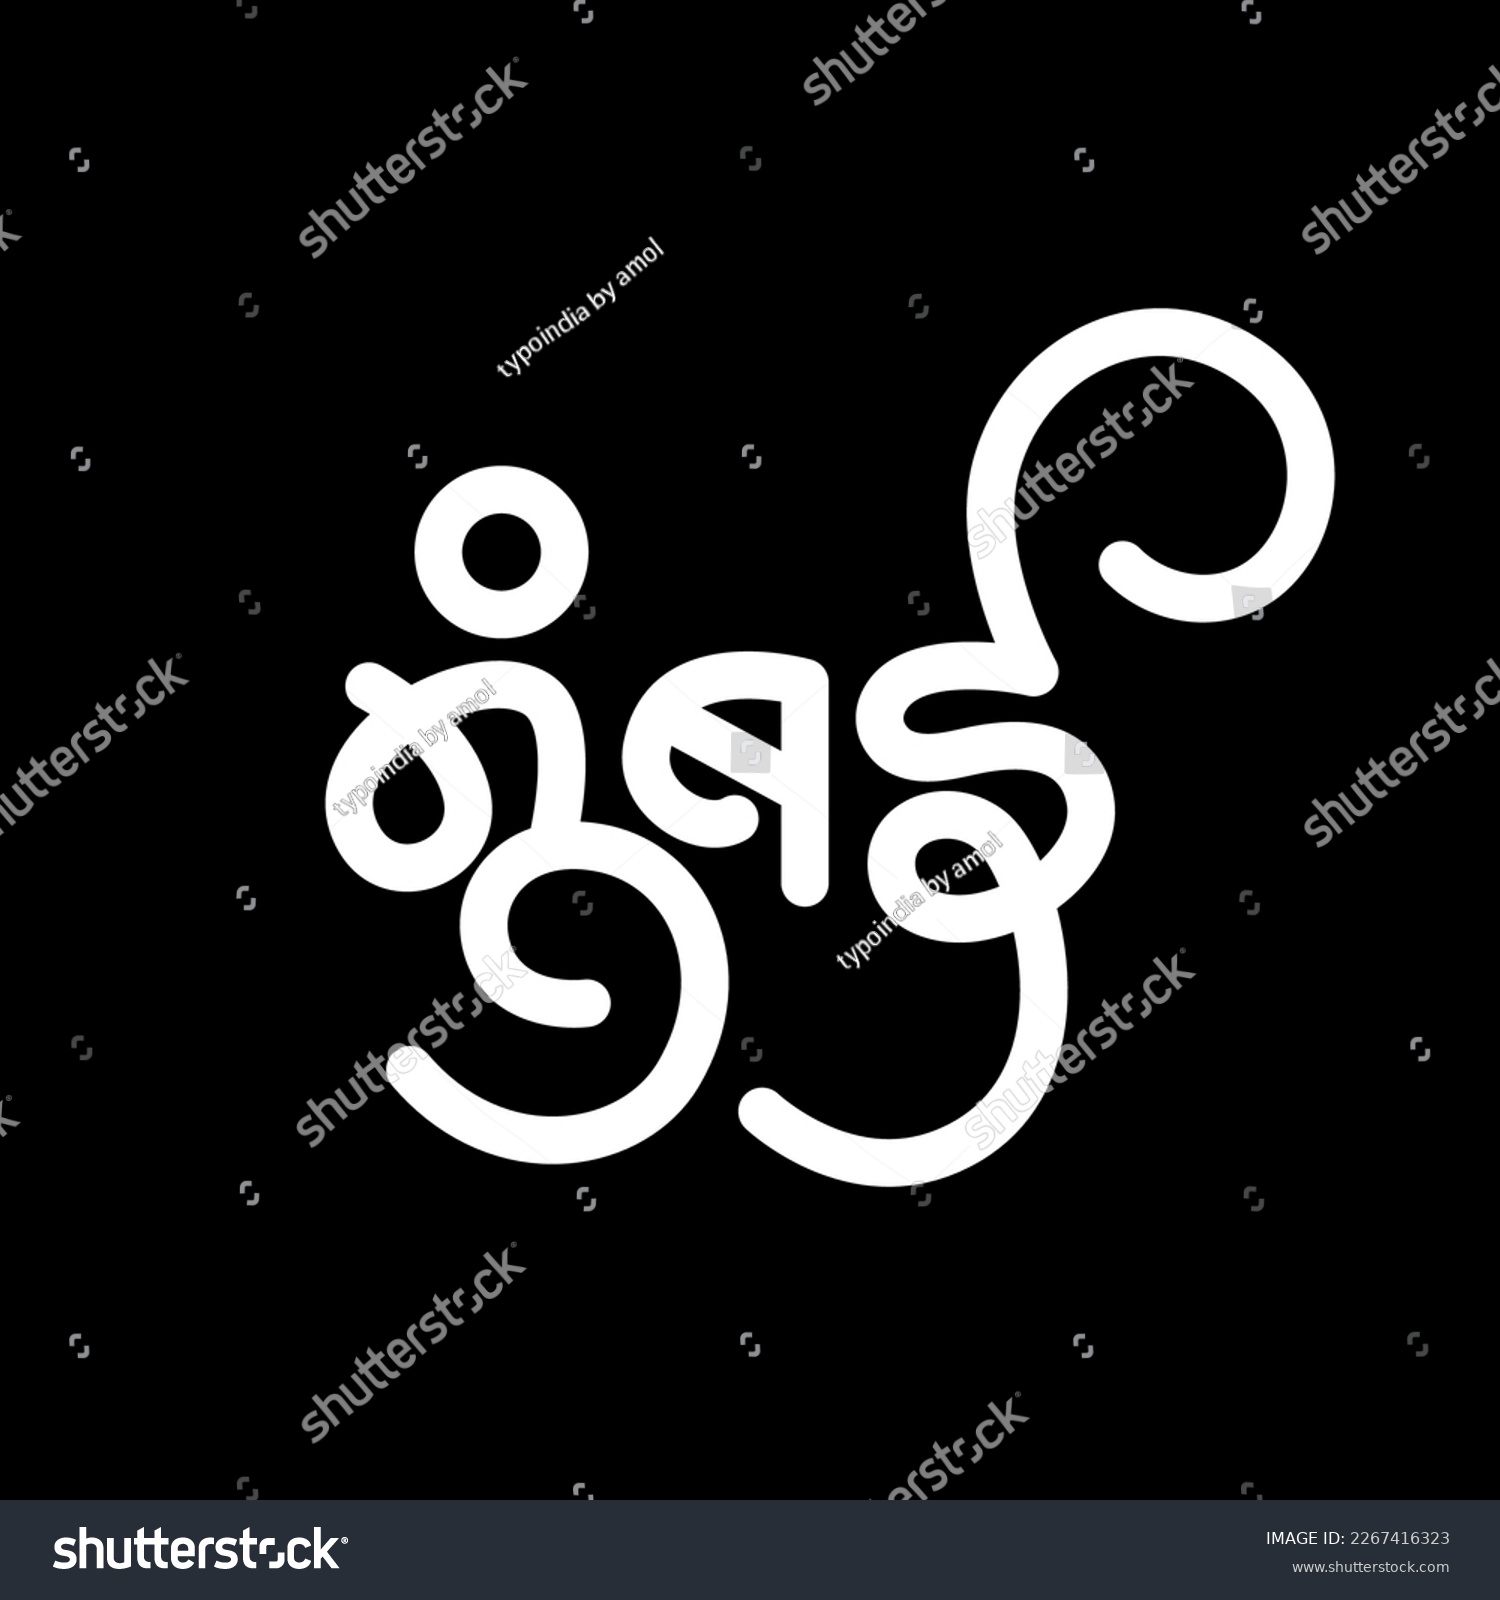 SVG of Mumbai is Written in Devanagari Calligraphy on black background. svg